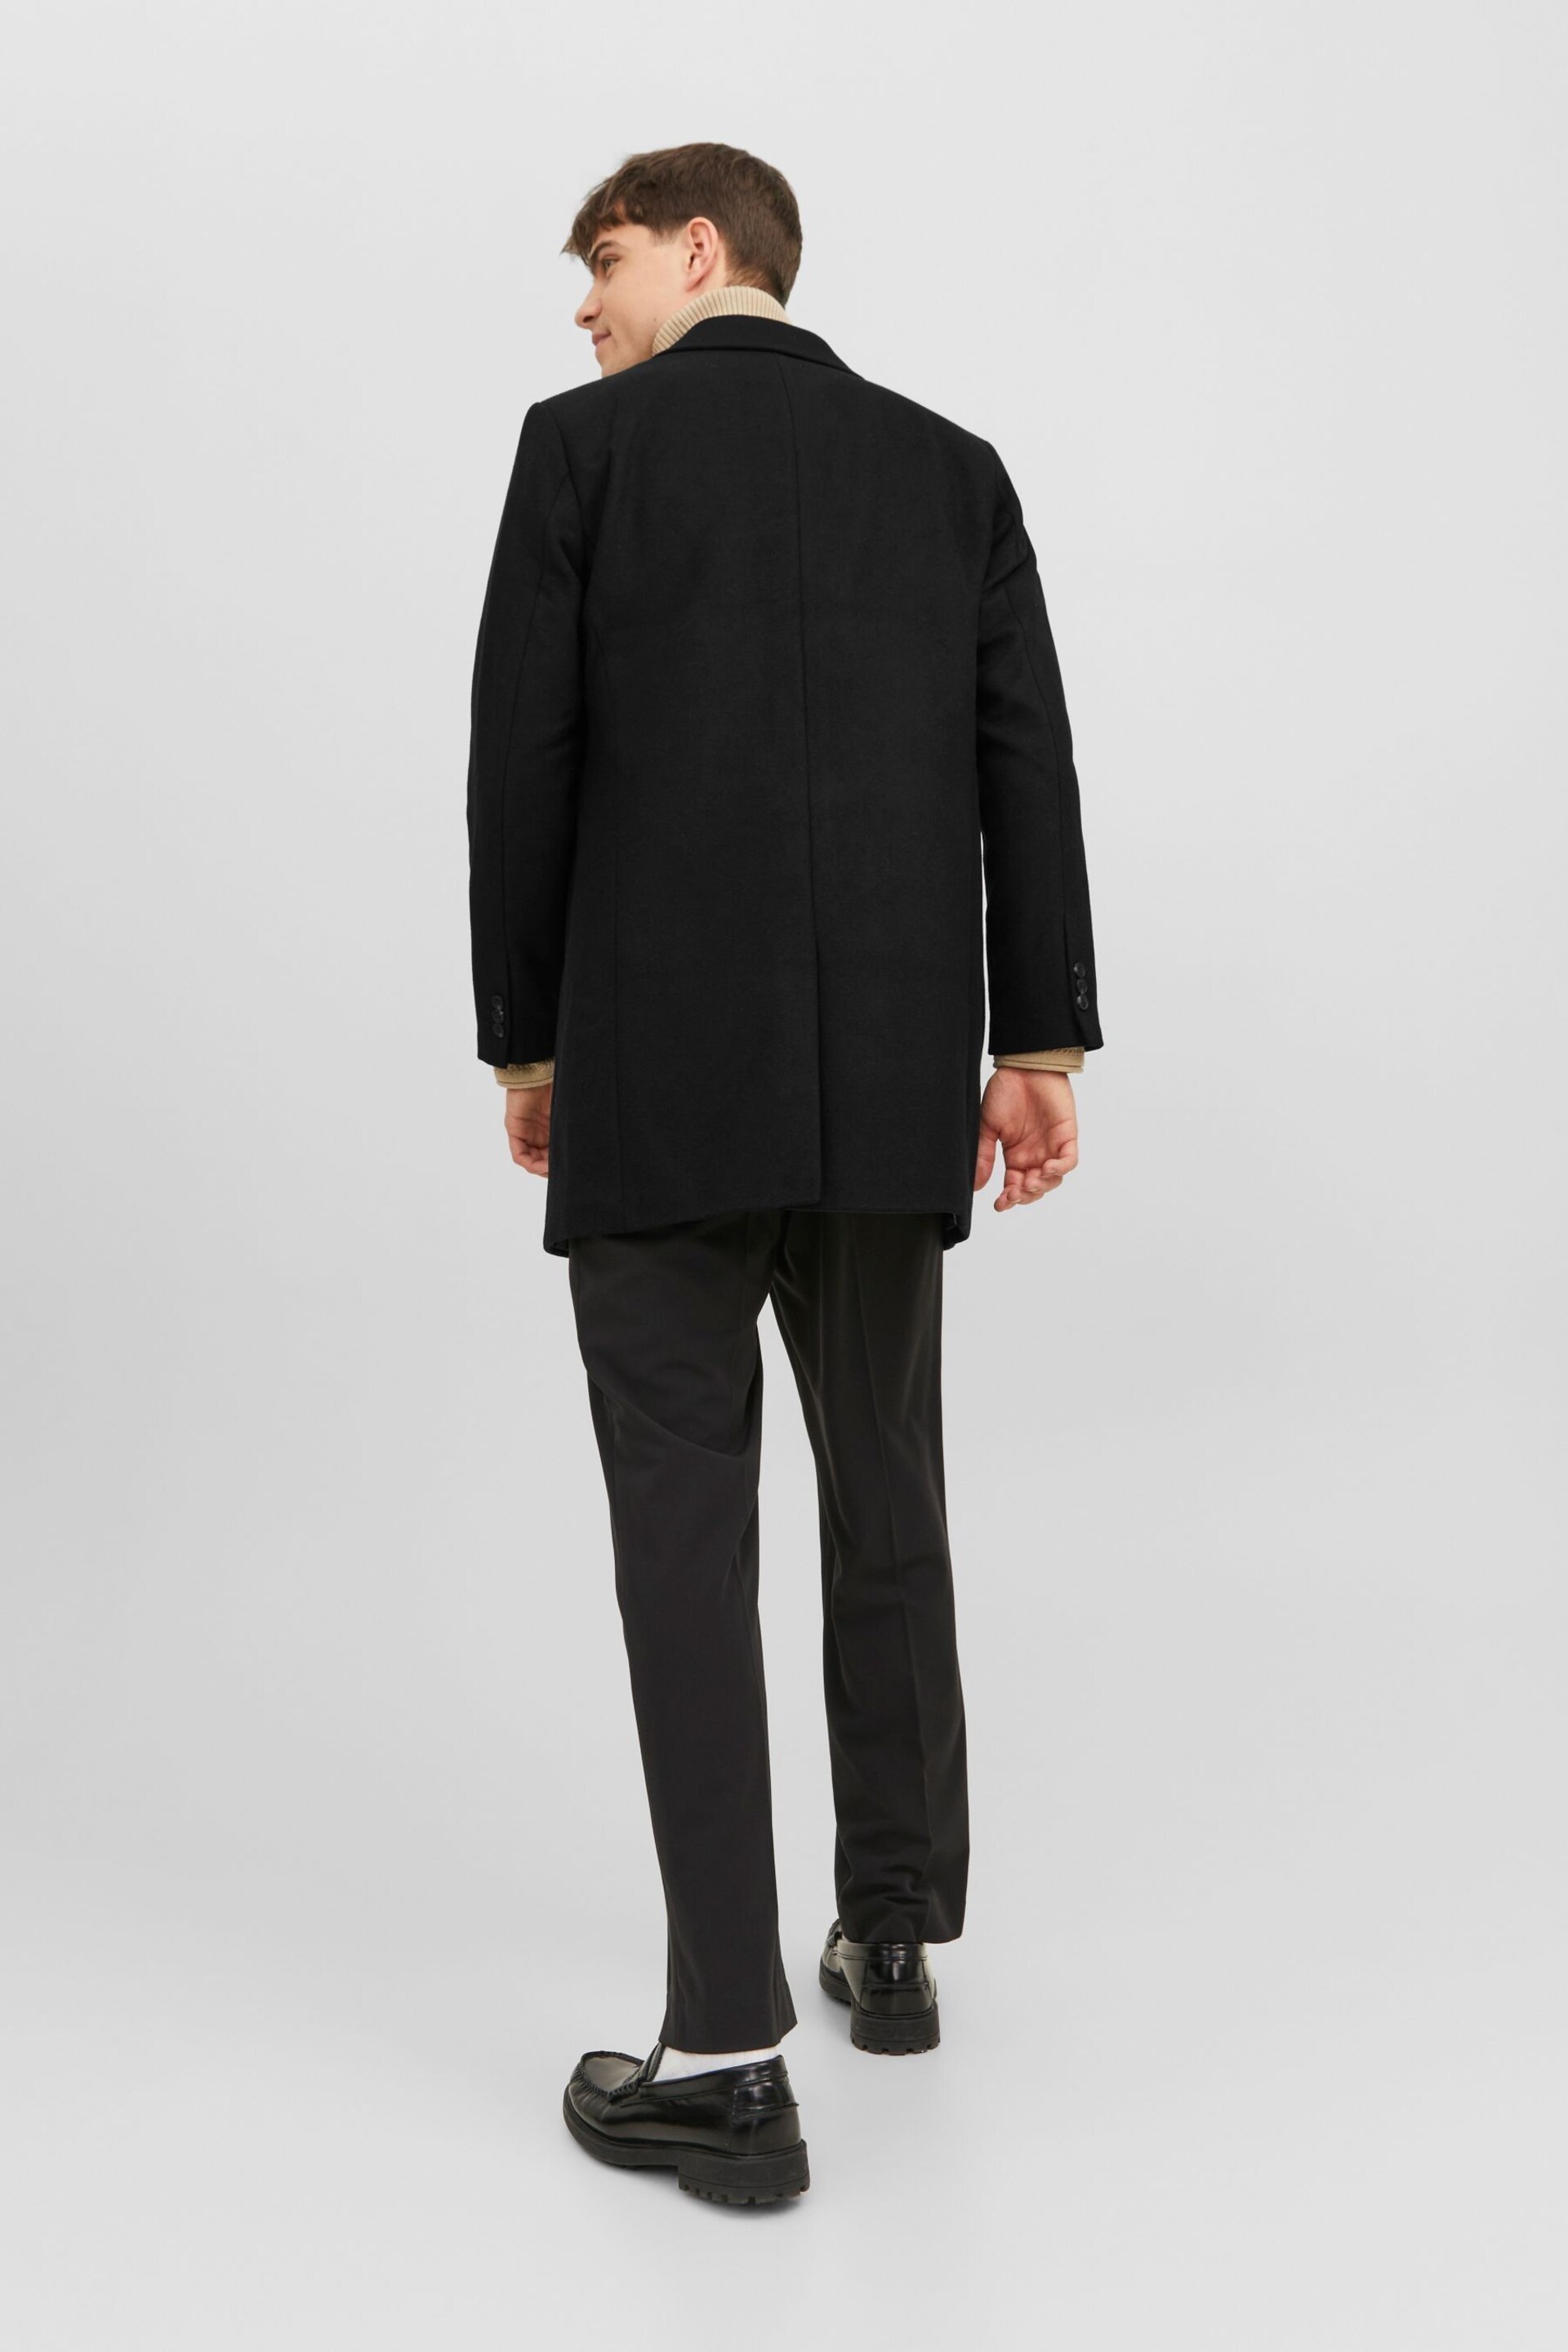 JACK & JONES Black Tailored Smart Wool Coat - Image 3 of 5